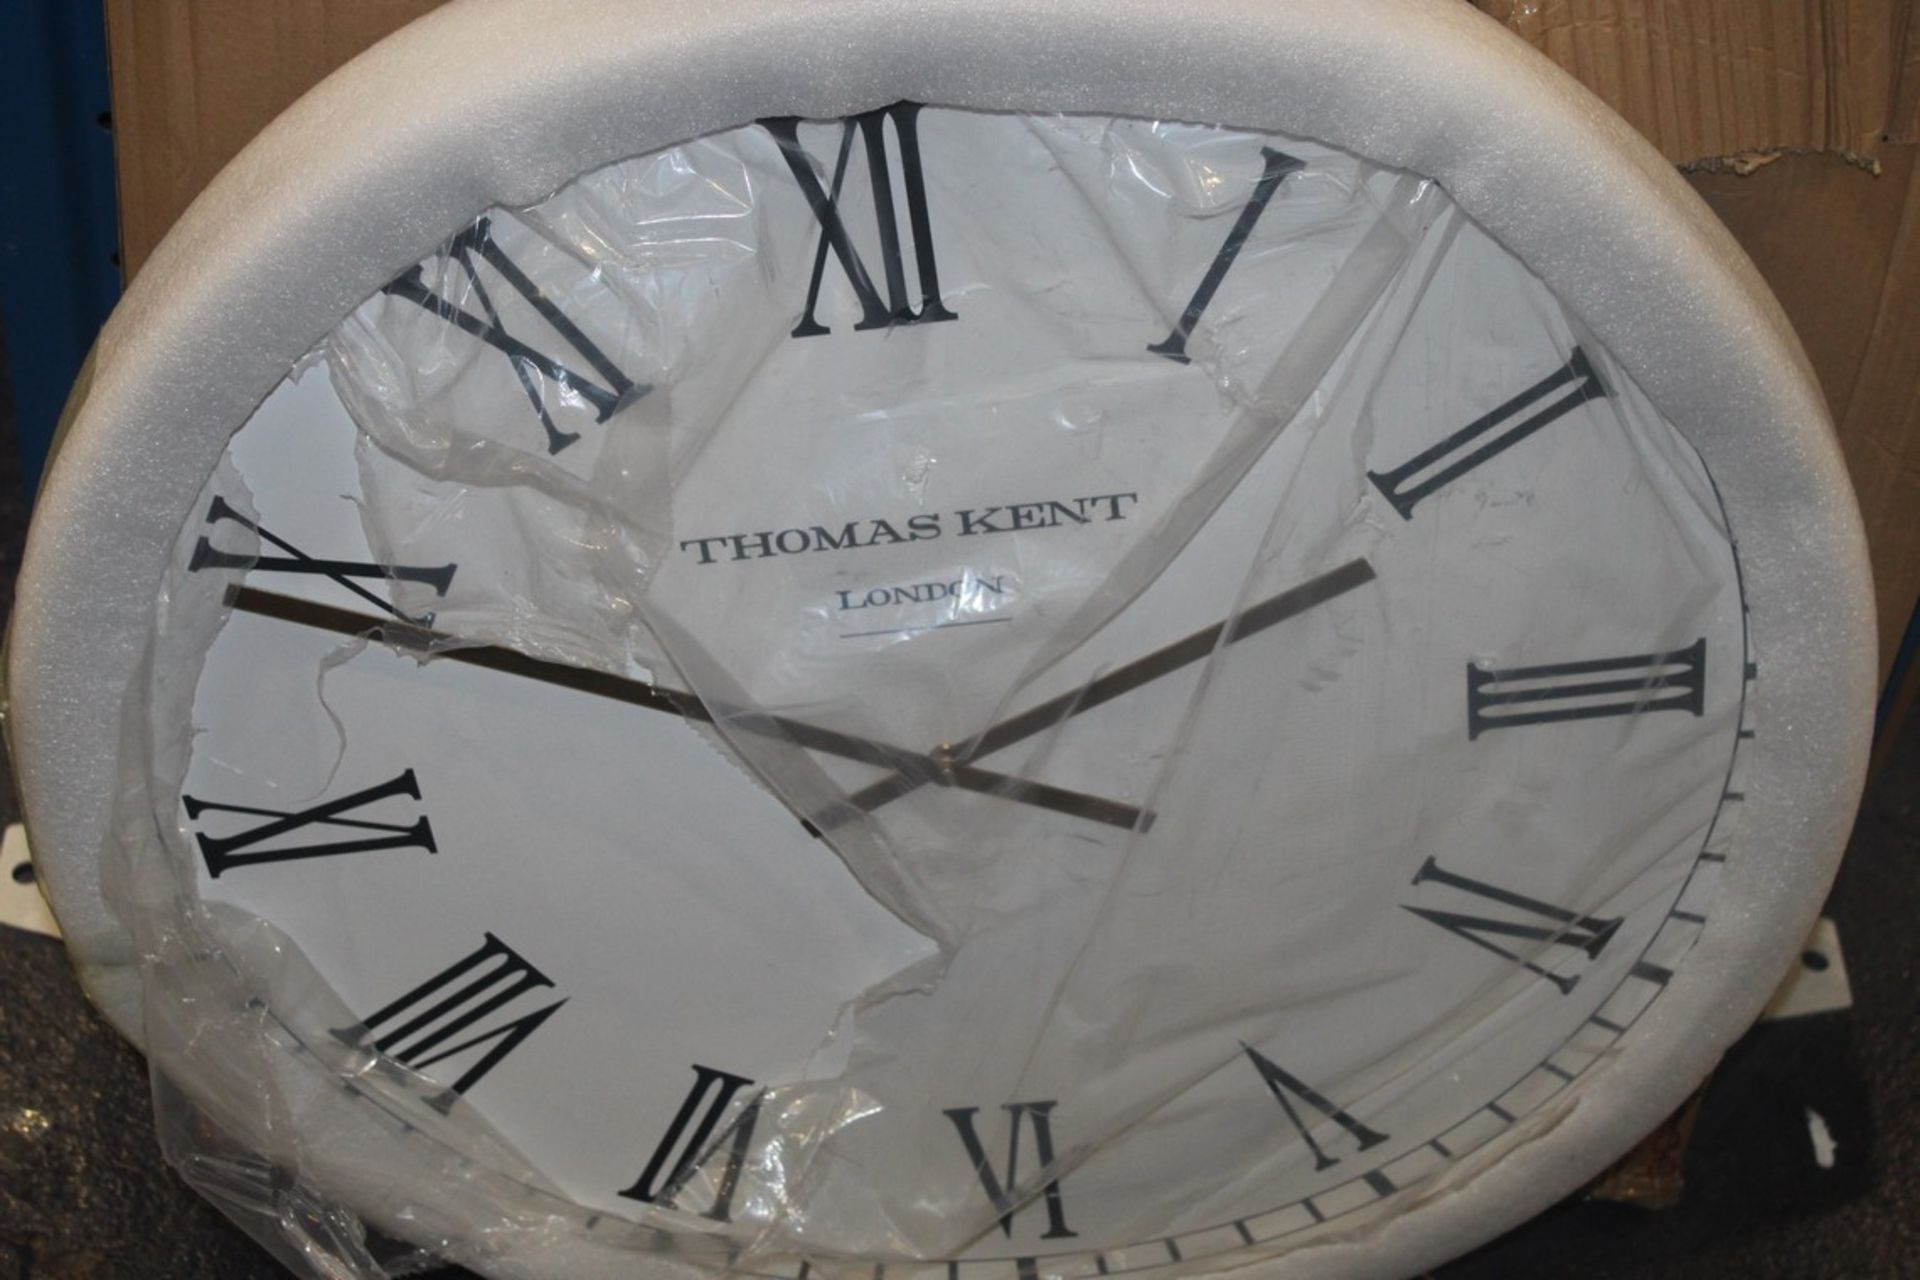 Boxed Thomas Kent of London Roman Numeral Oversized Wall Clock RRP £50 (17911)